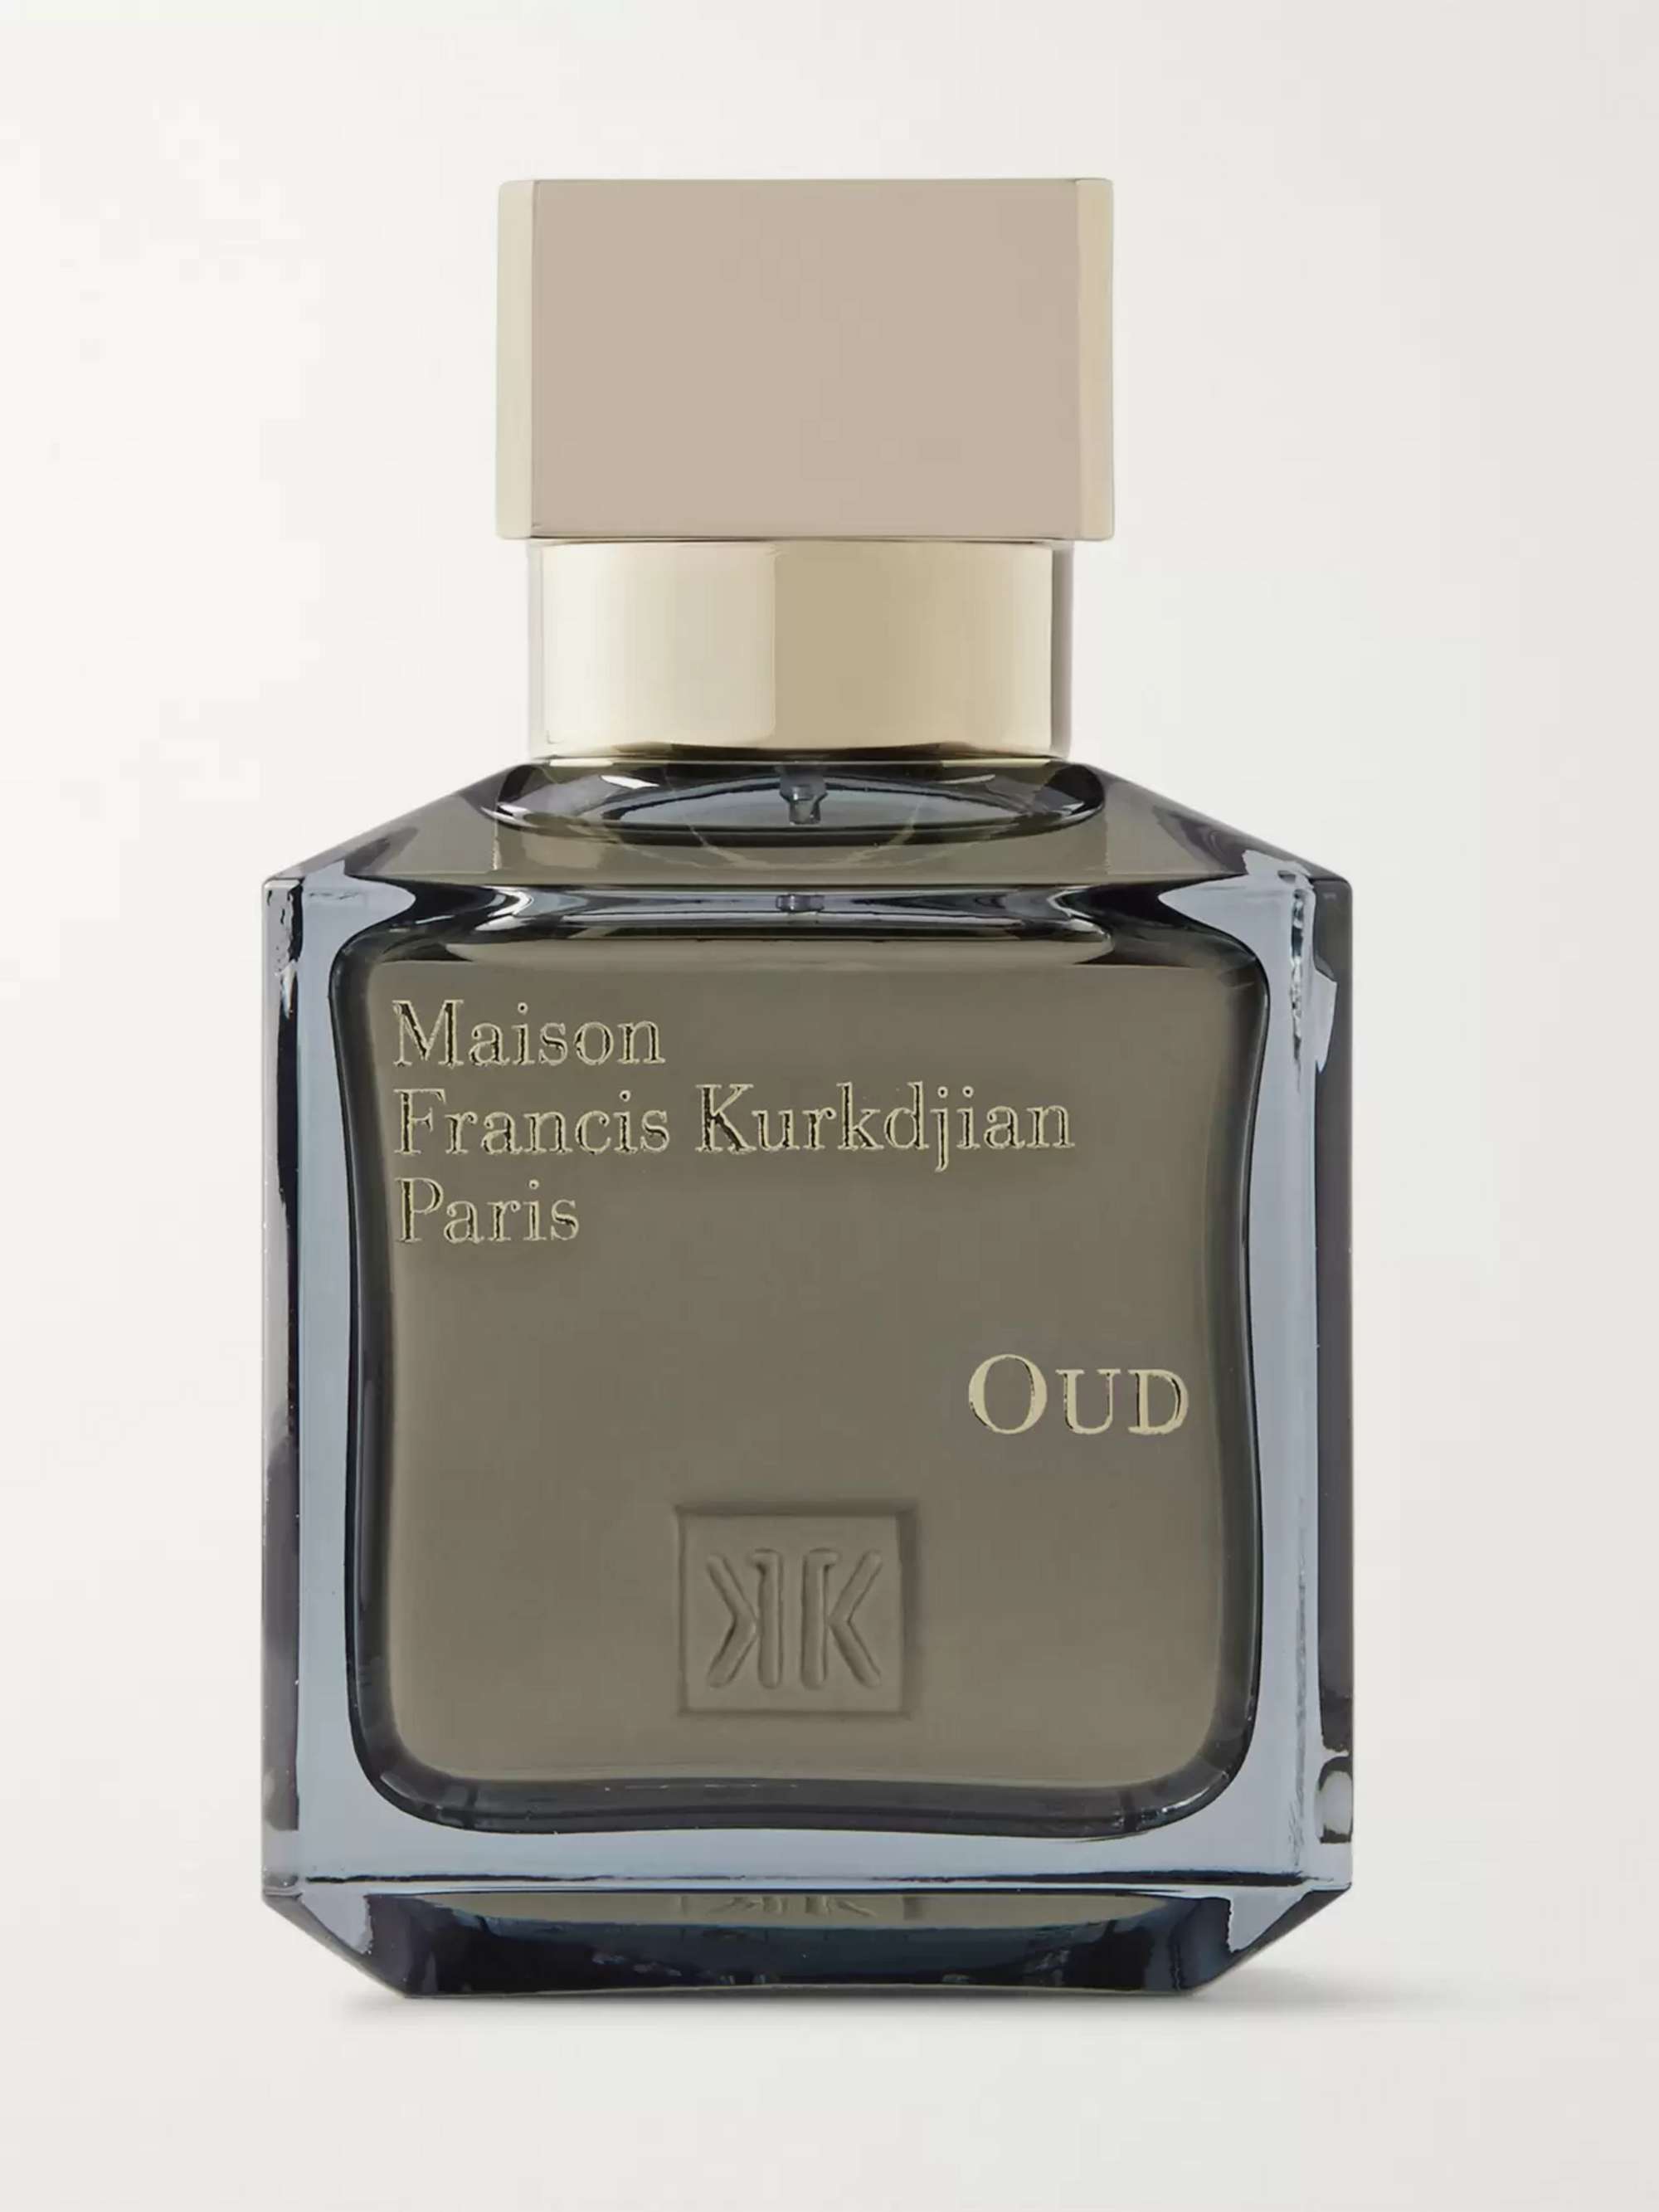 MAISON FRANCIS KURKDJIAN Oud Eau de Parfum - Oud, Patchouli, 70ml